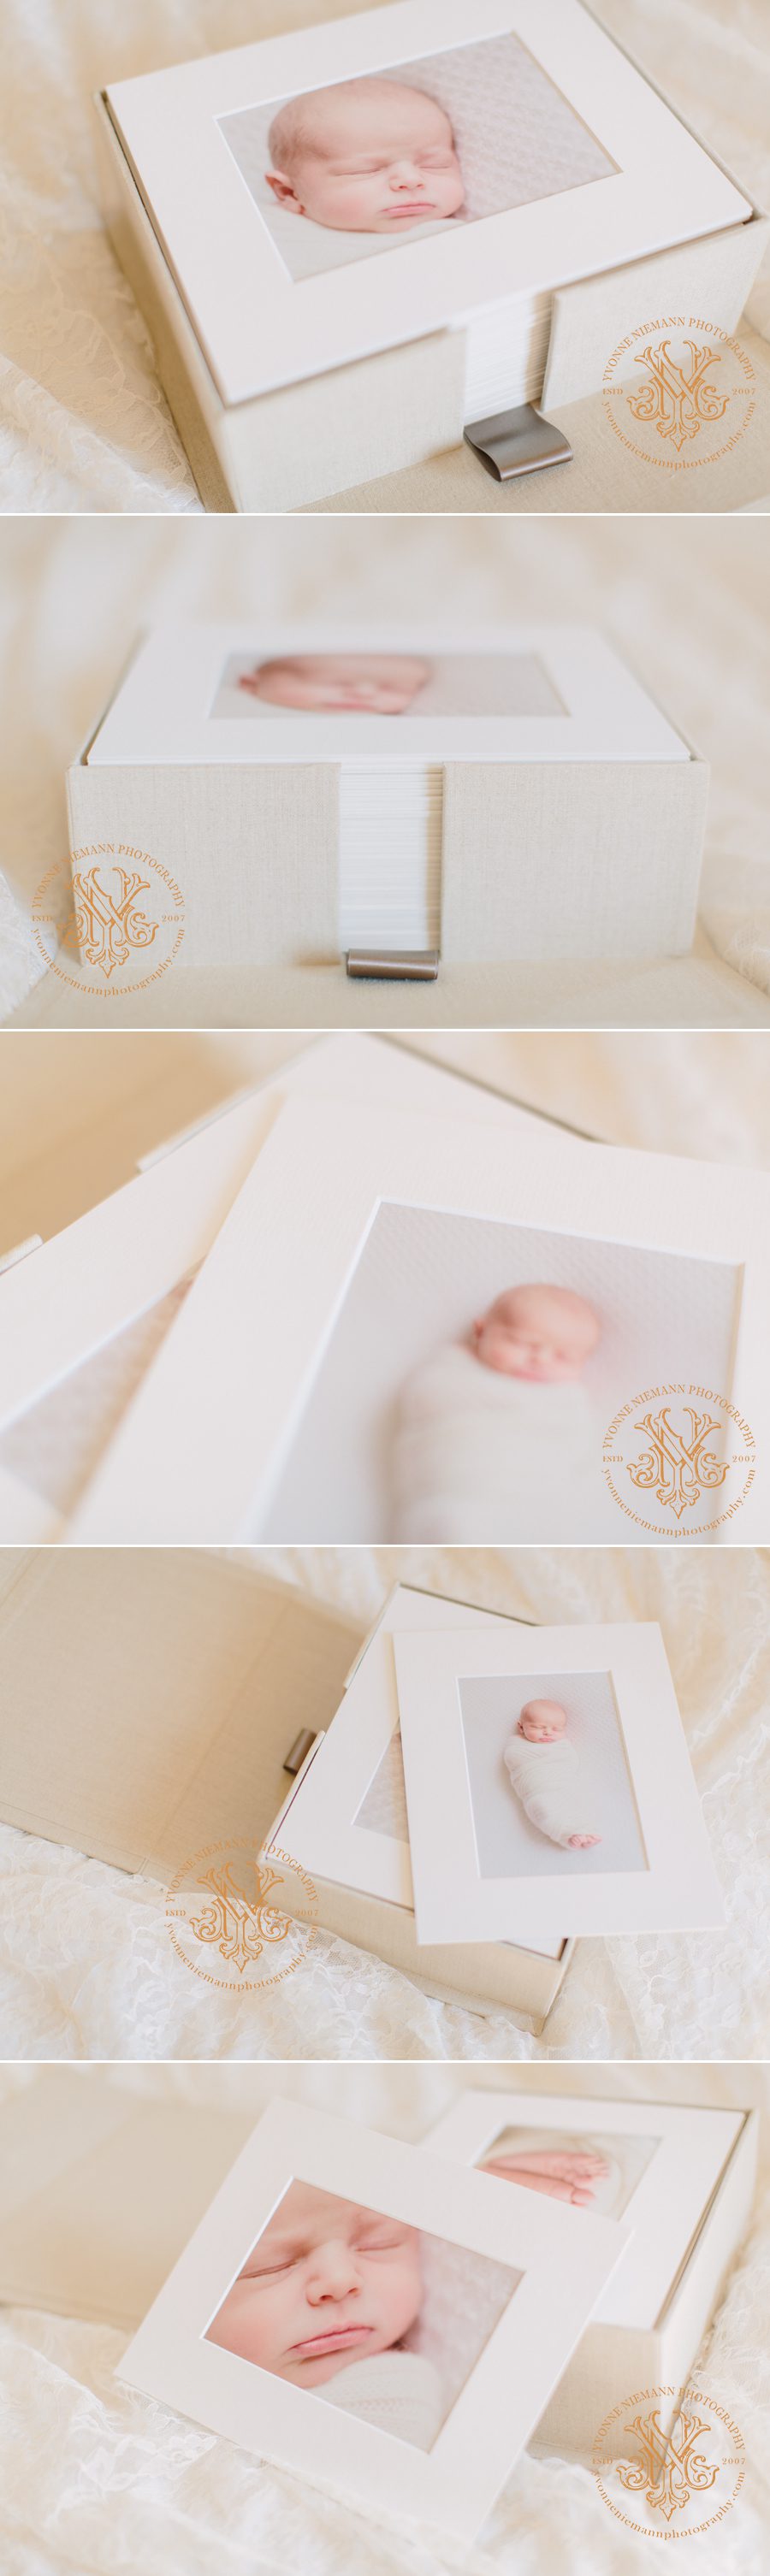 Matted newborn portraits in Cypress Albums presentation box.